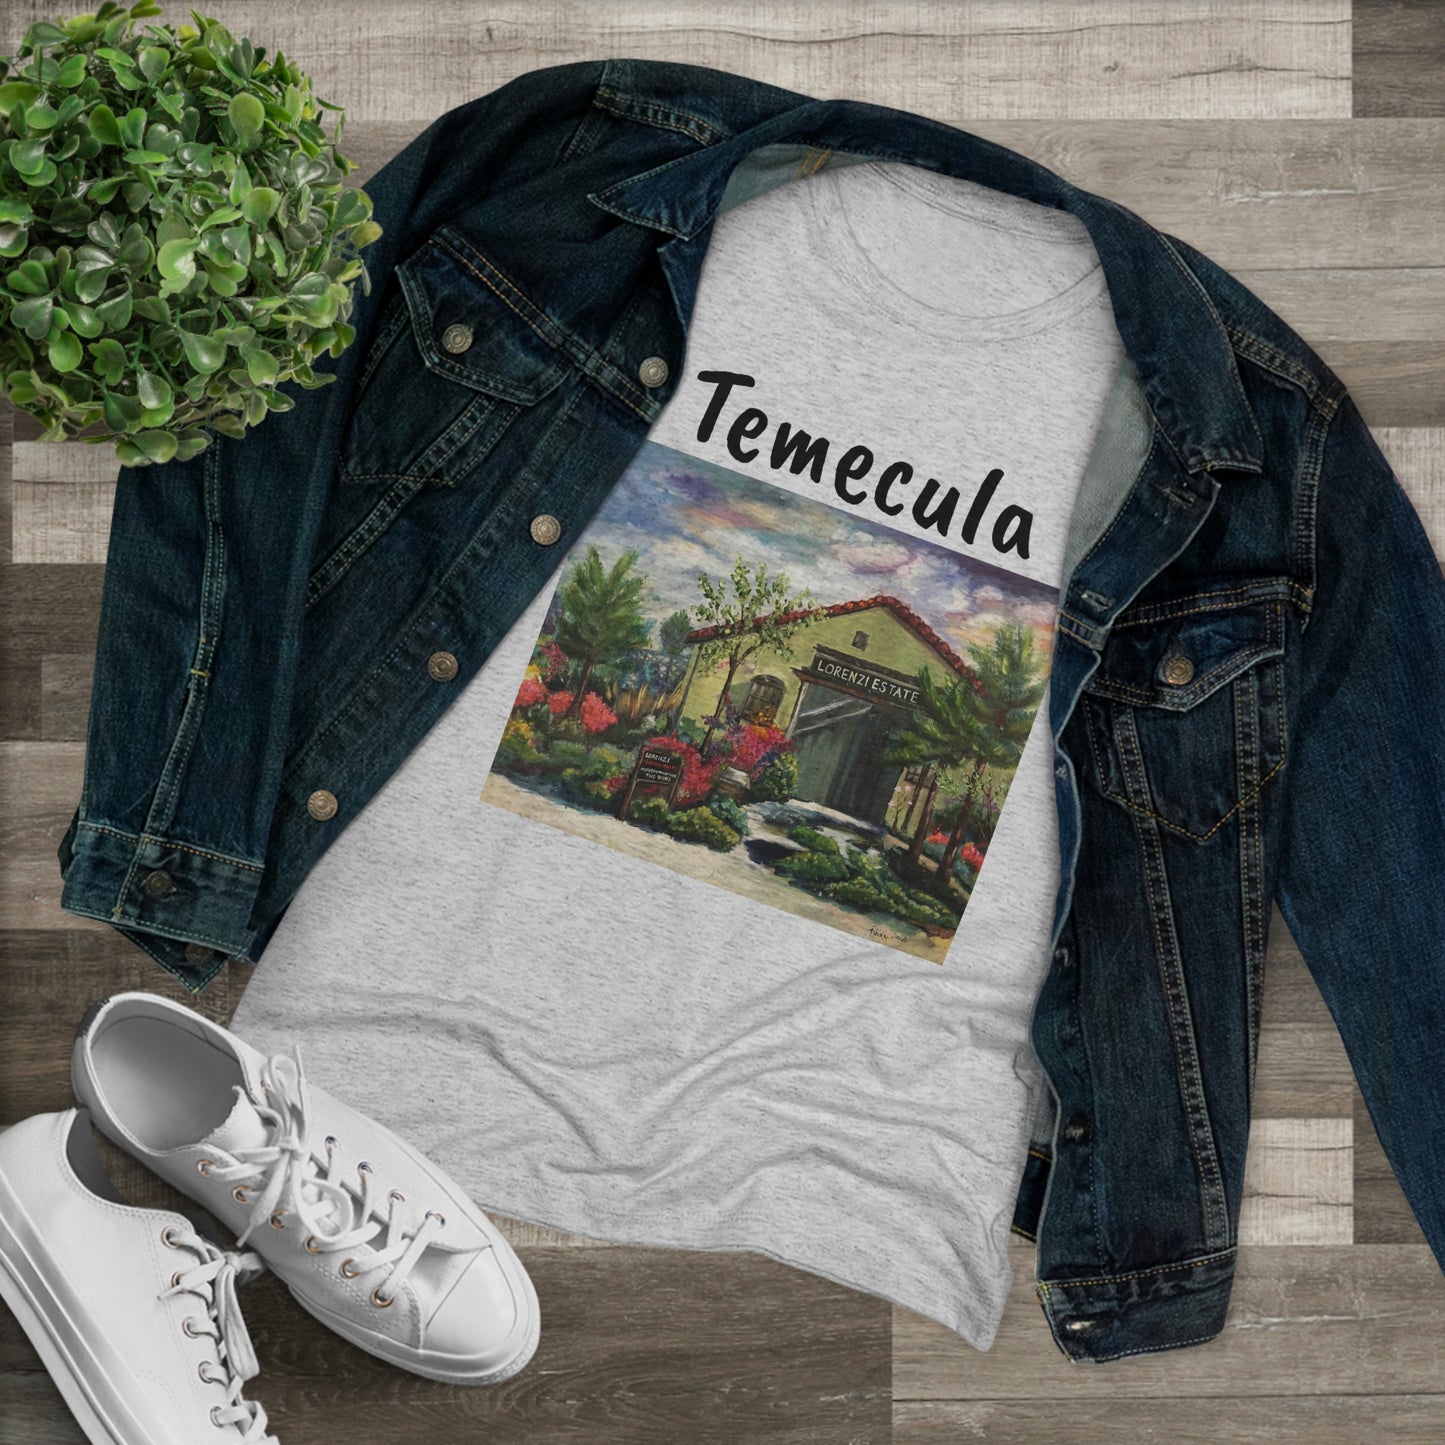 Lorenzi Estate Wines Temecula Women's fitted Triblend Tee  tee shirt